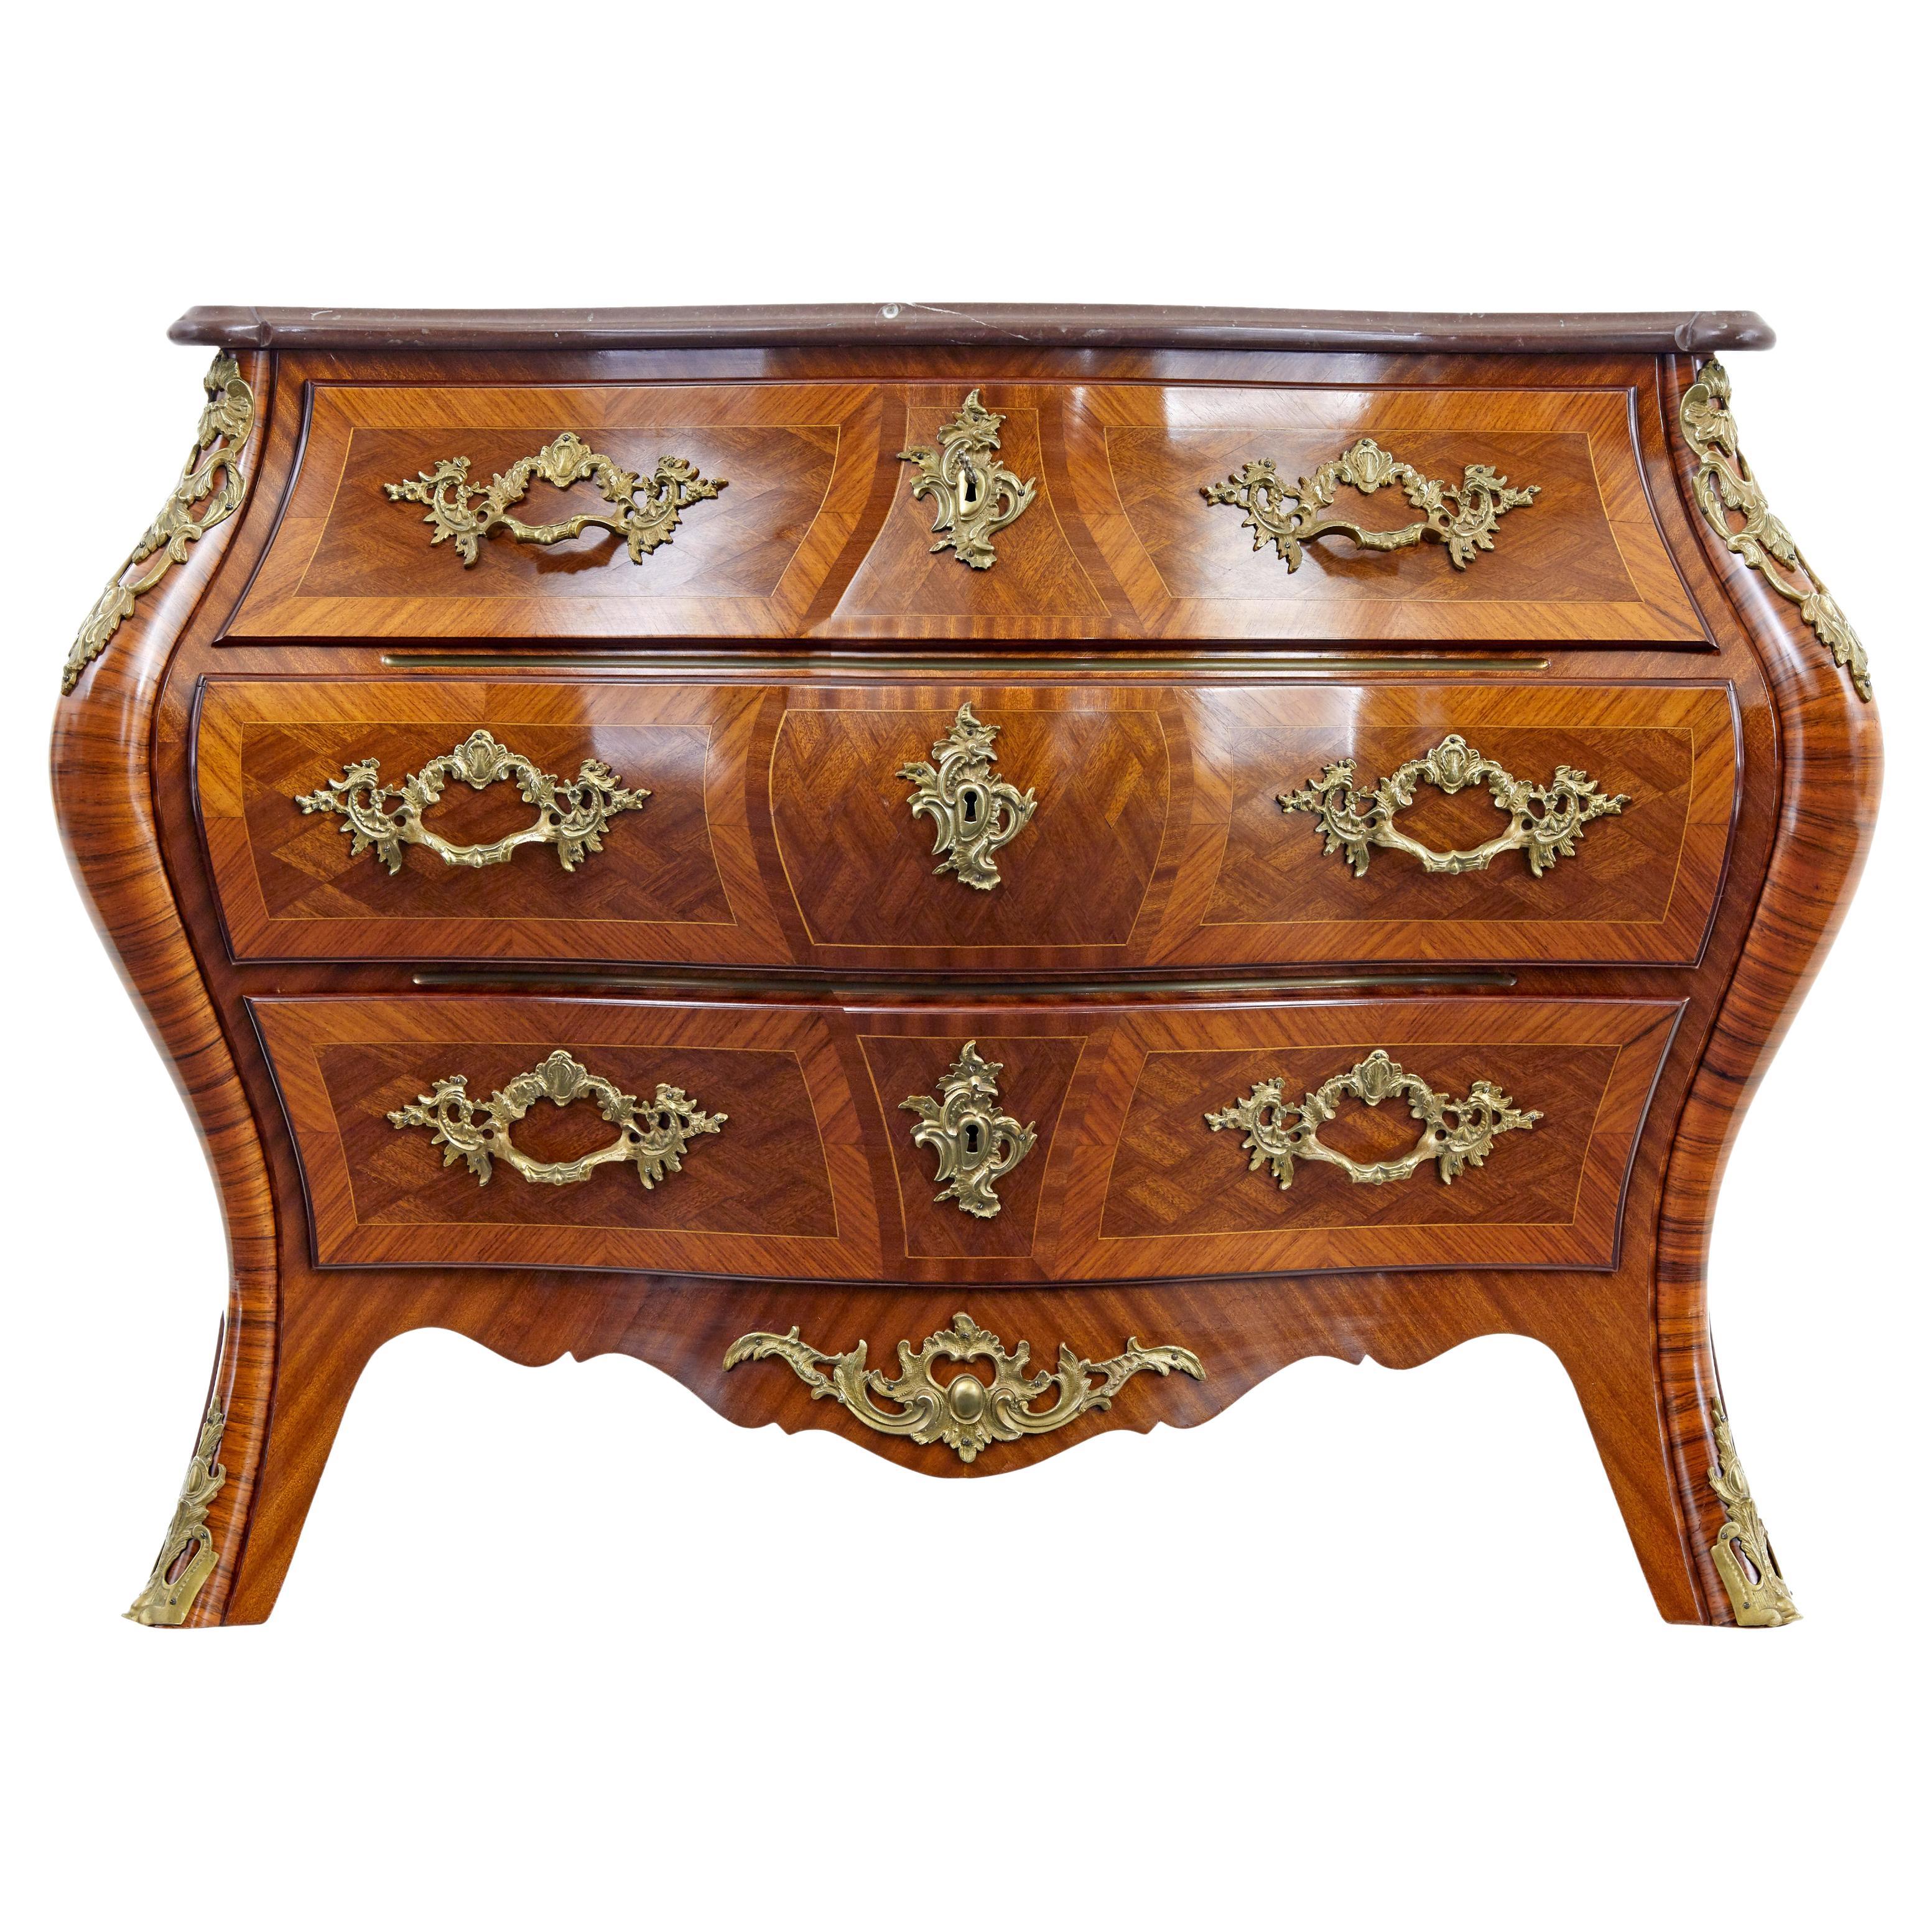 Mid 20th century rococo revival bombe kingwood mahogany chest of drawers